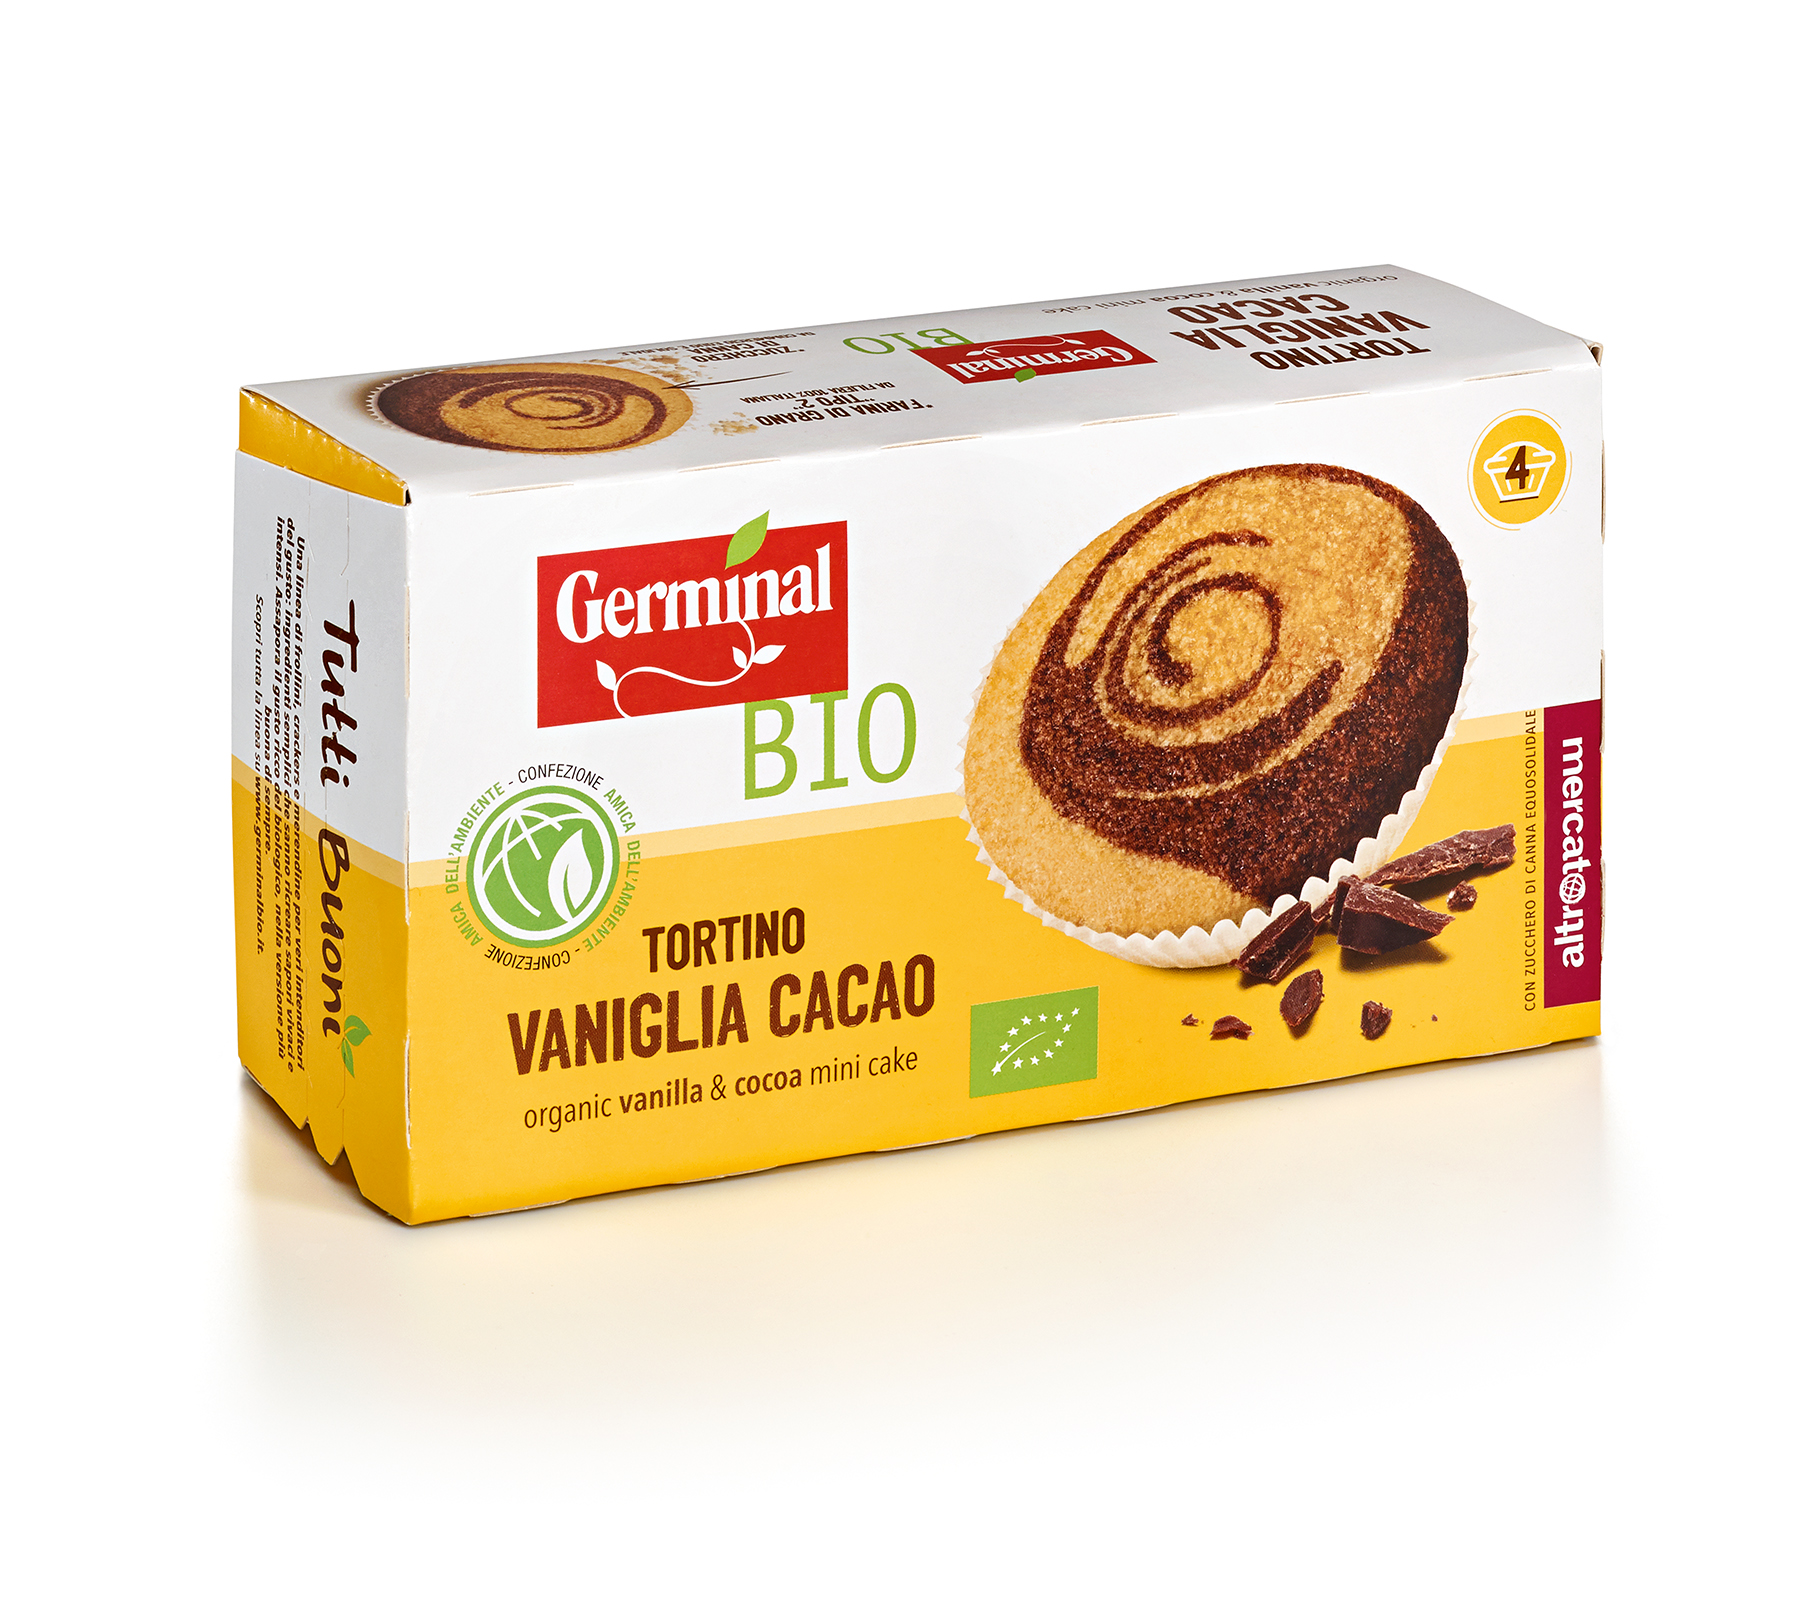 Image:  Tortino Vaniglia Cacao